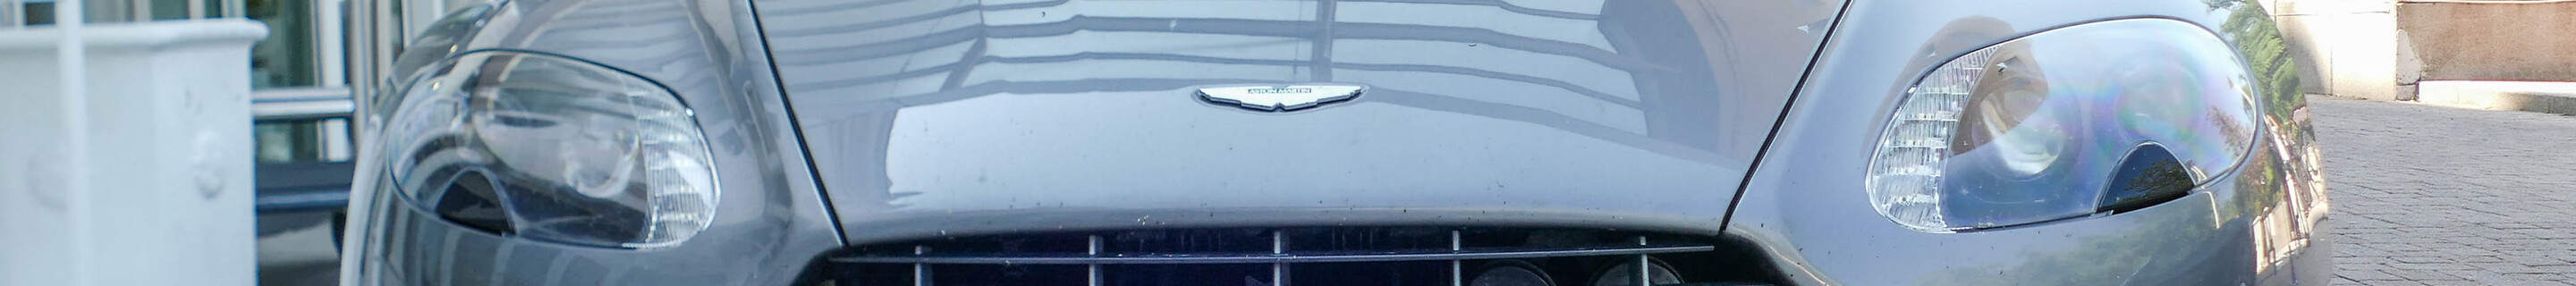 Aston Martin V8 Vantage Roadster 2012